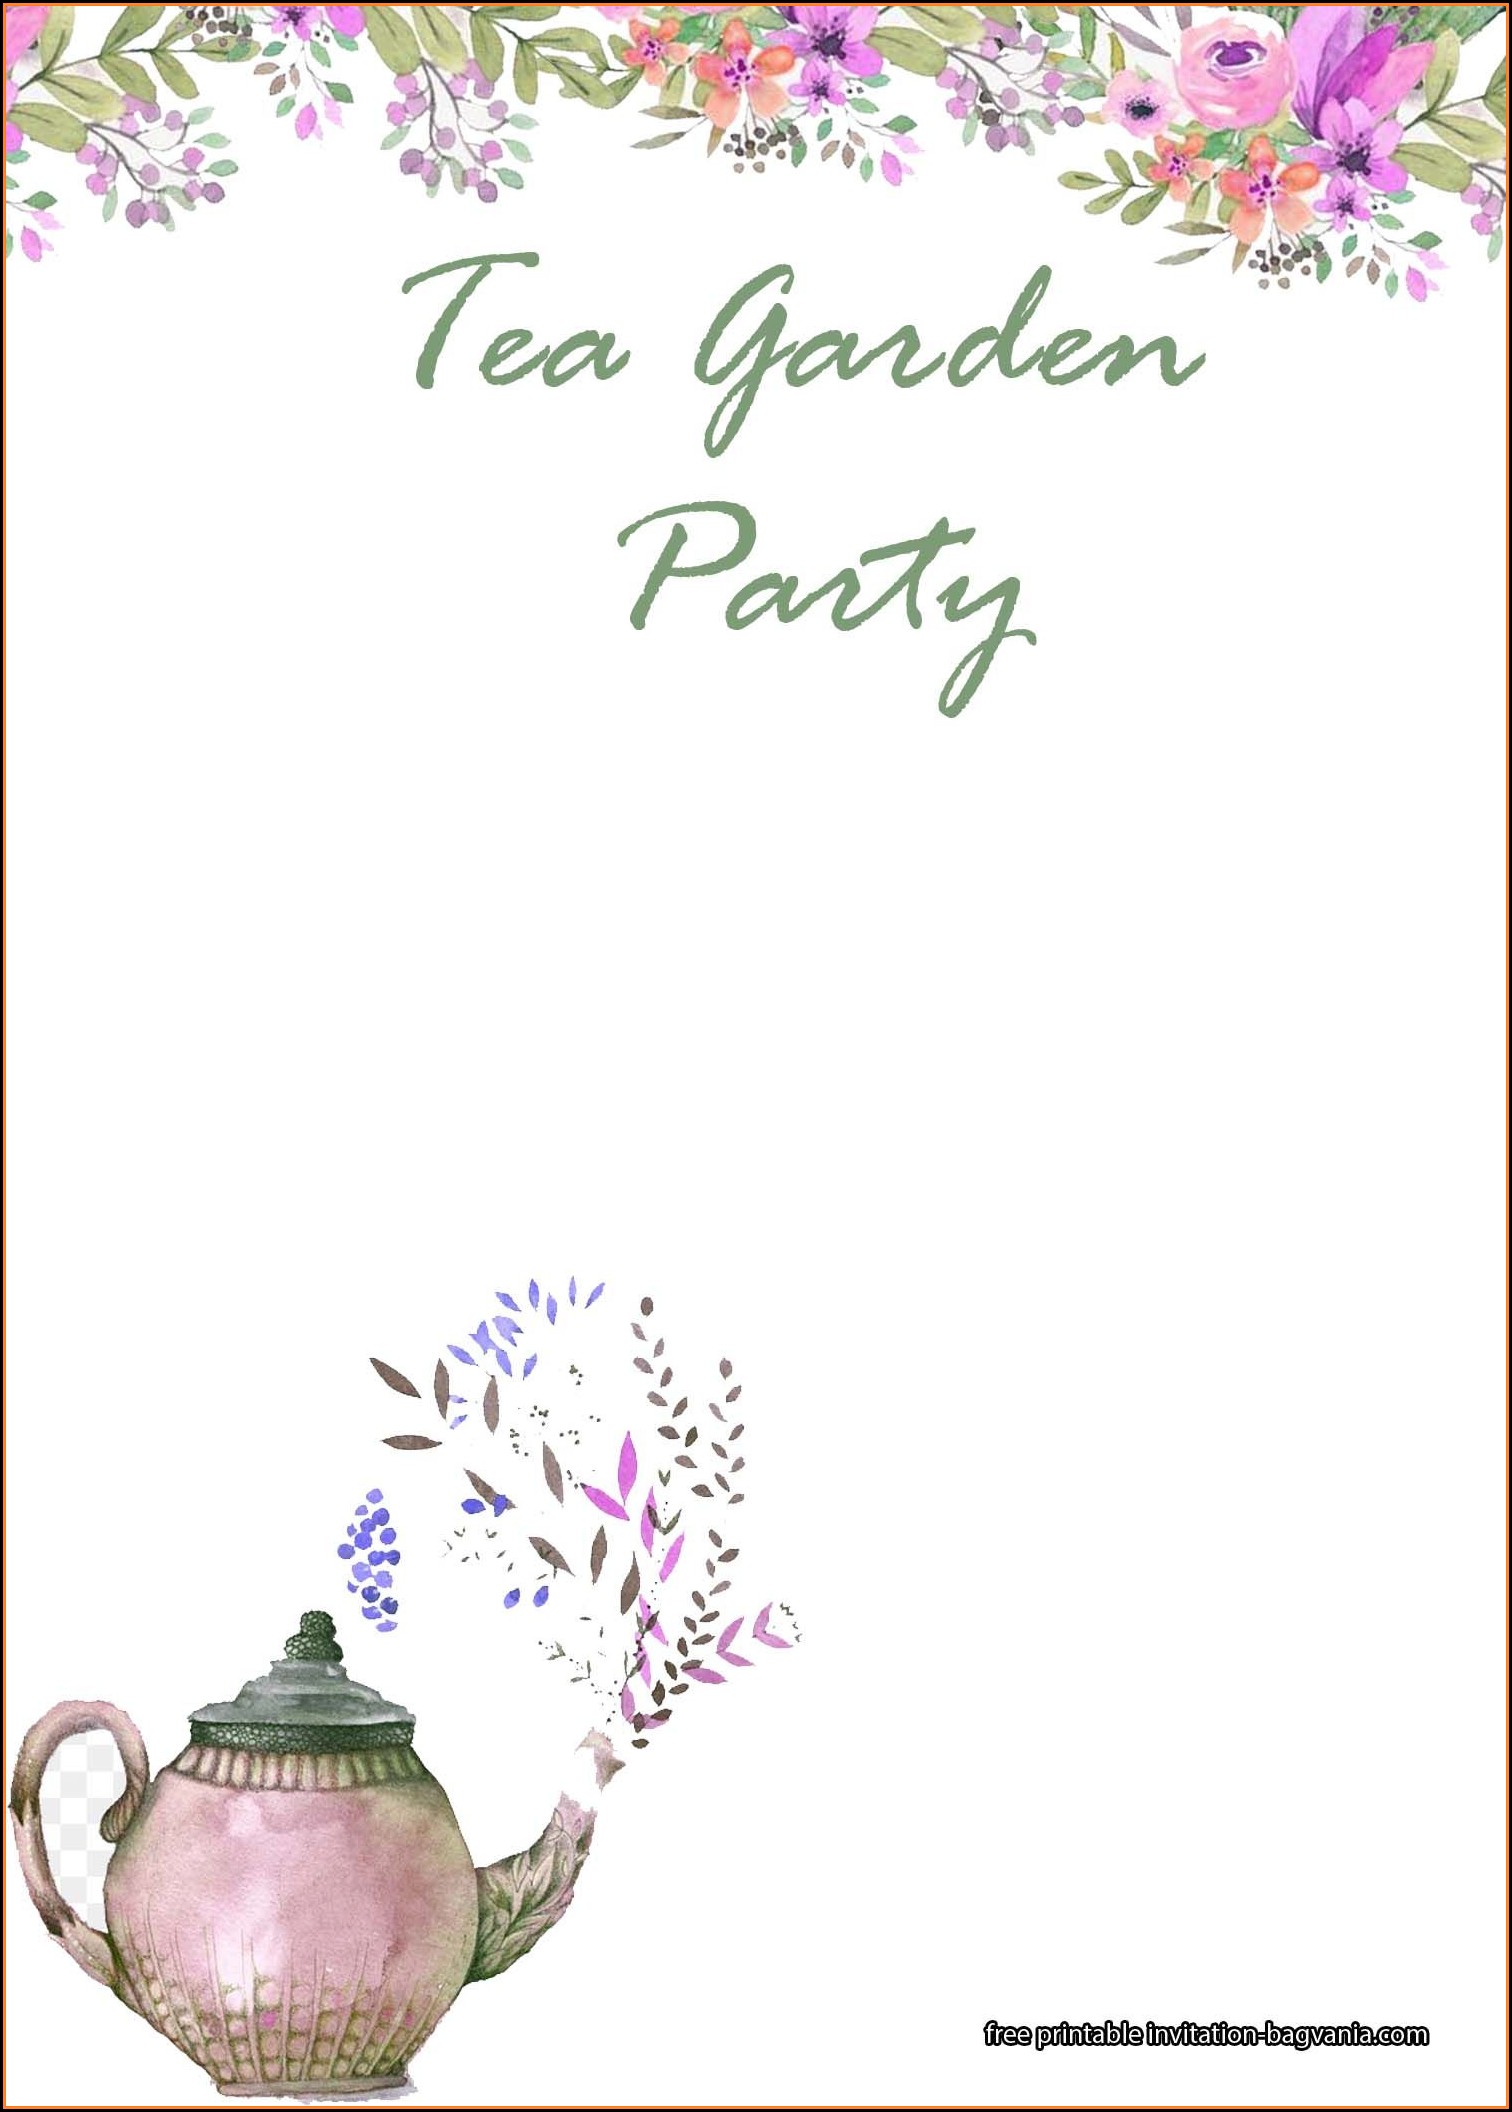 Tea Party Invitation Templates Free Download